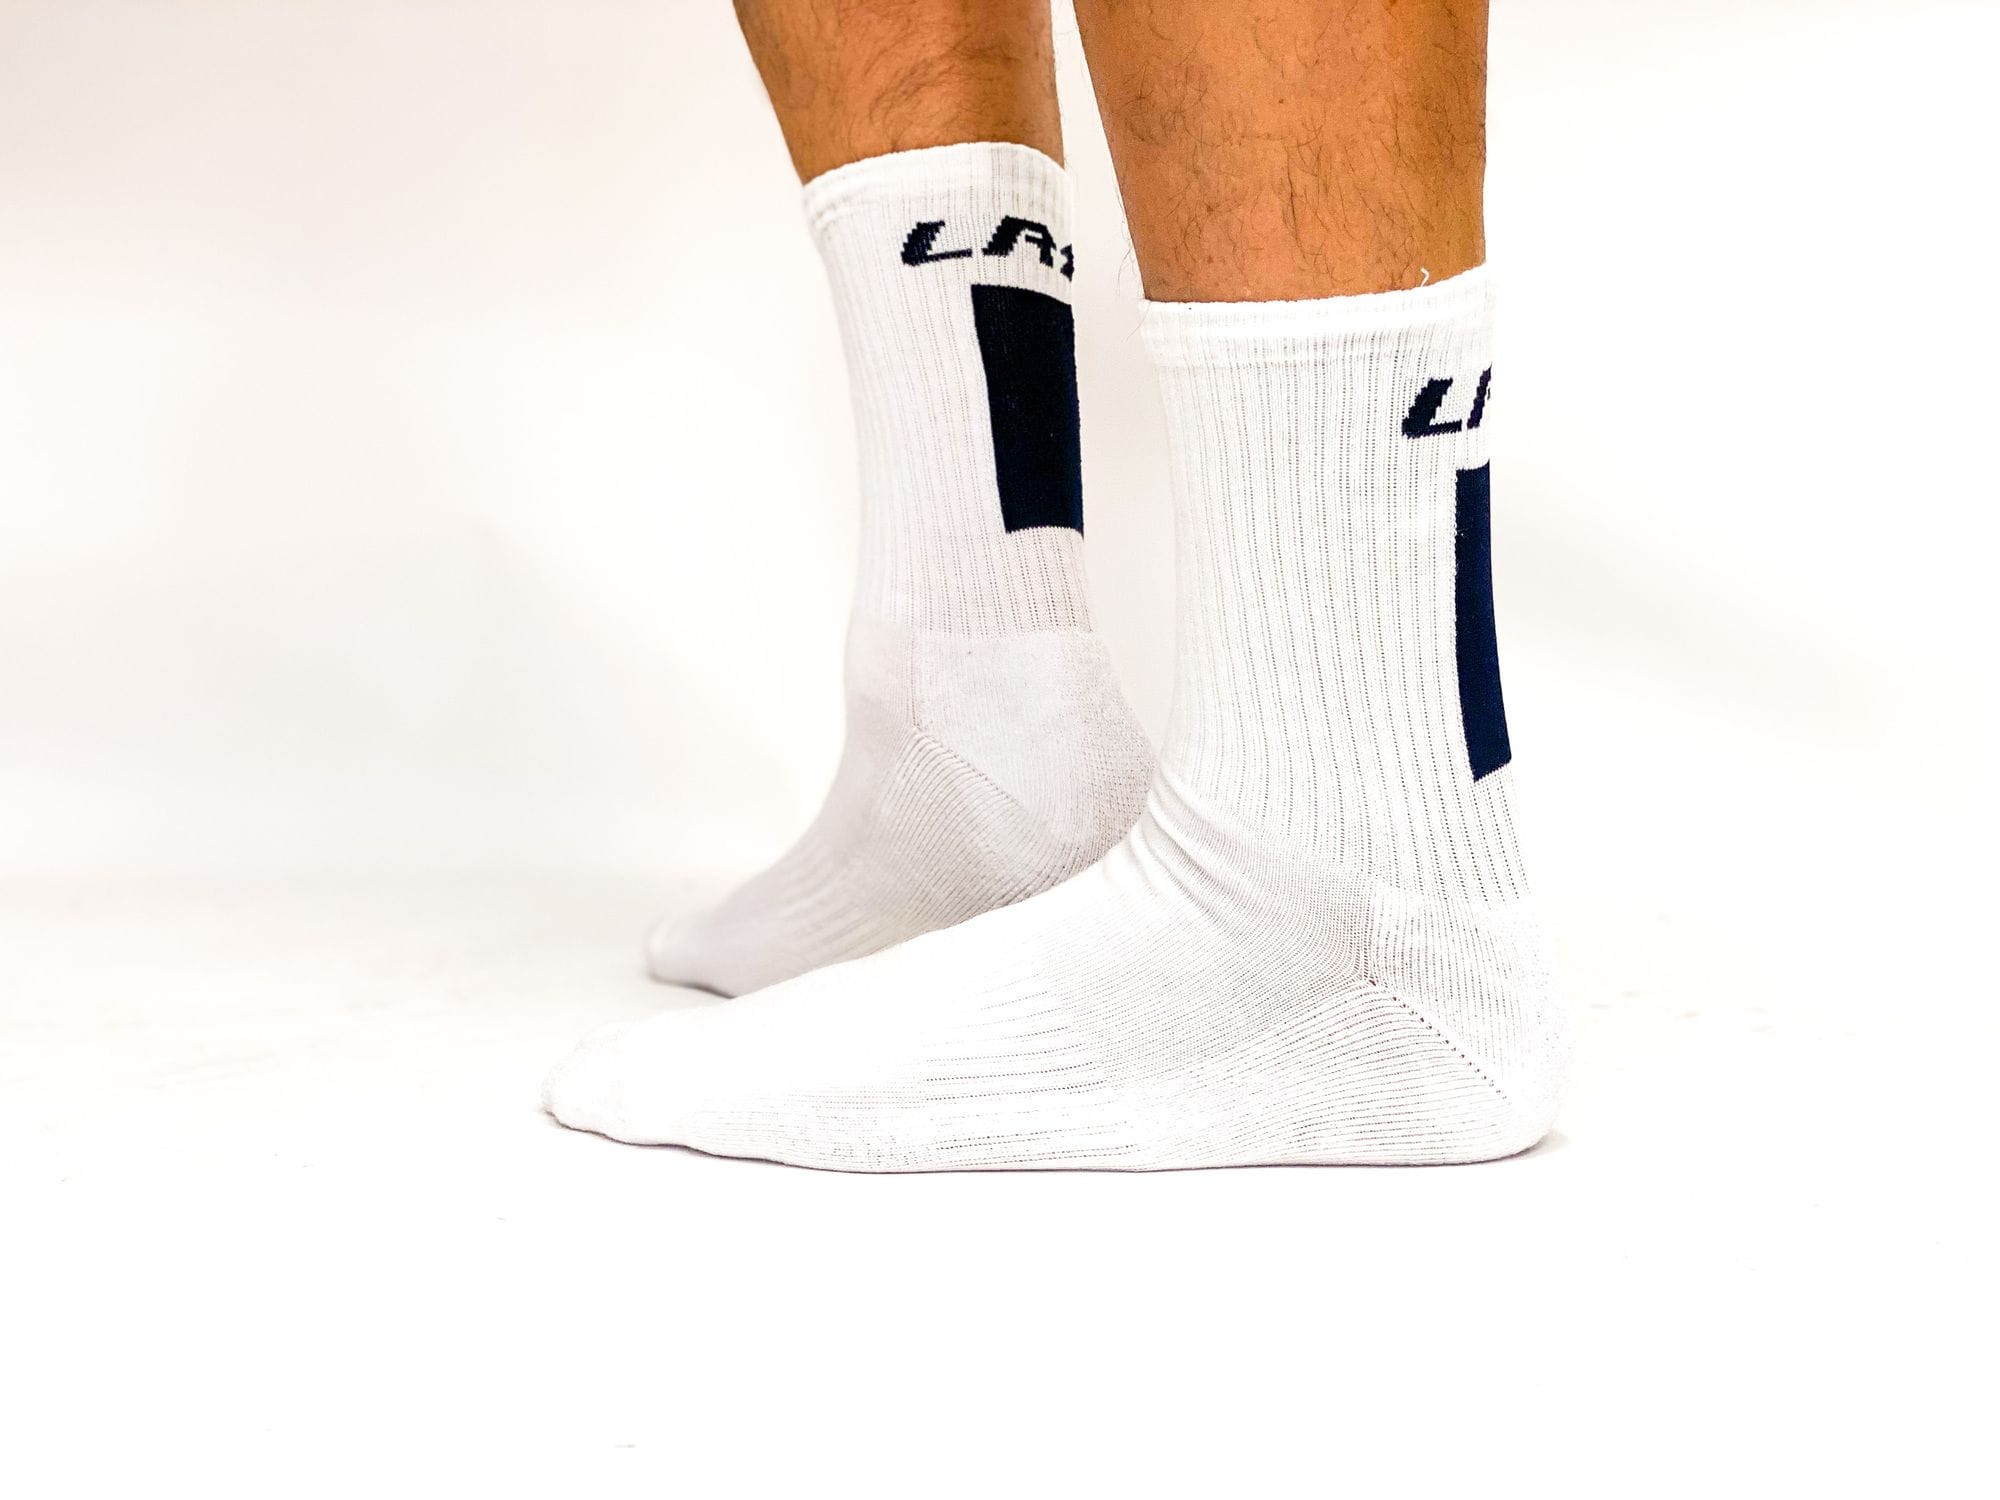 LRF Calf Sock Vertical Print (white)